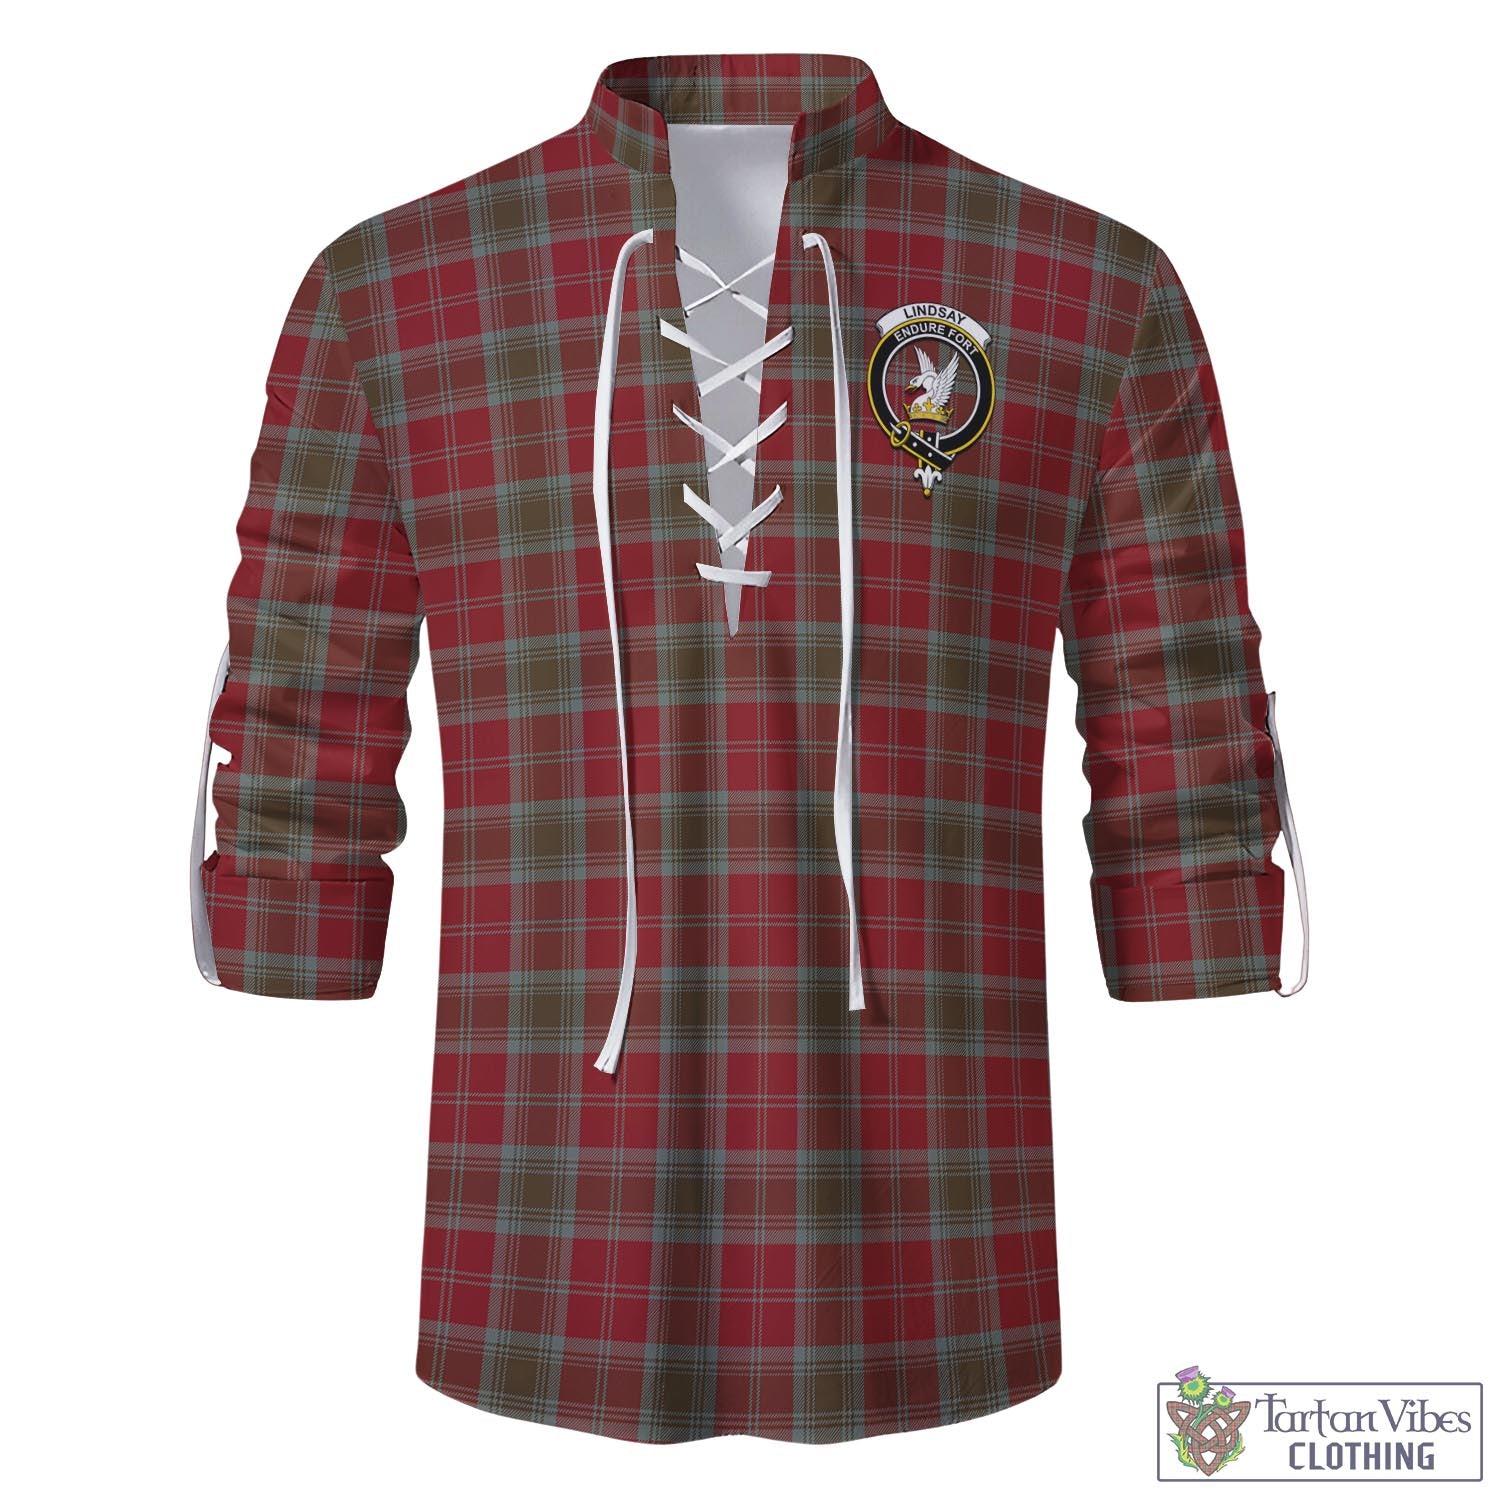 Tartan Vibes Clothing Lindsay Weathered Tartan Men's Scottish Traditional Jacobite Ghillie Kilt Shirt with Family Crest